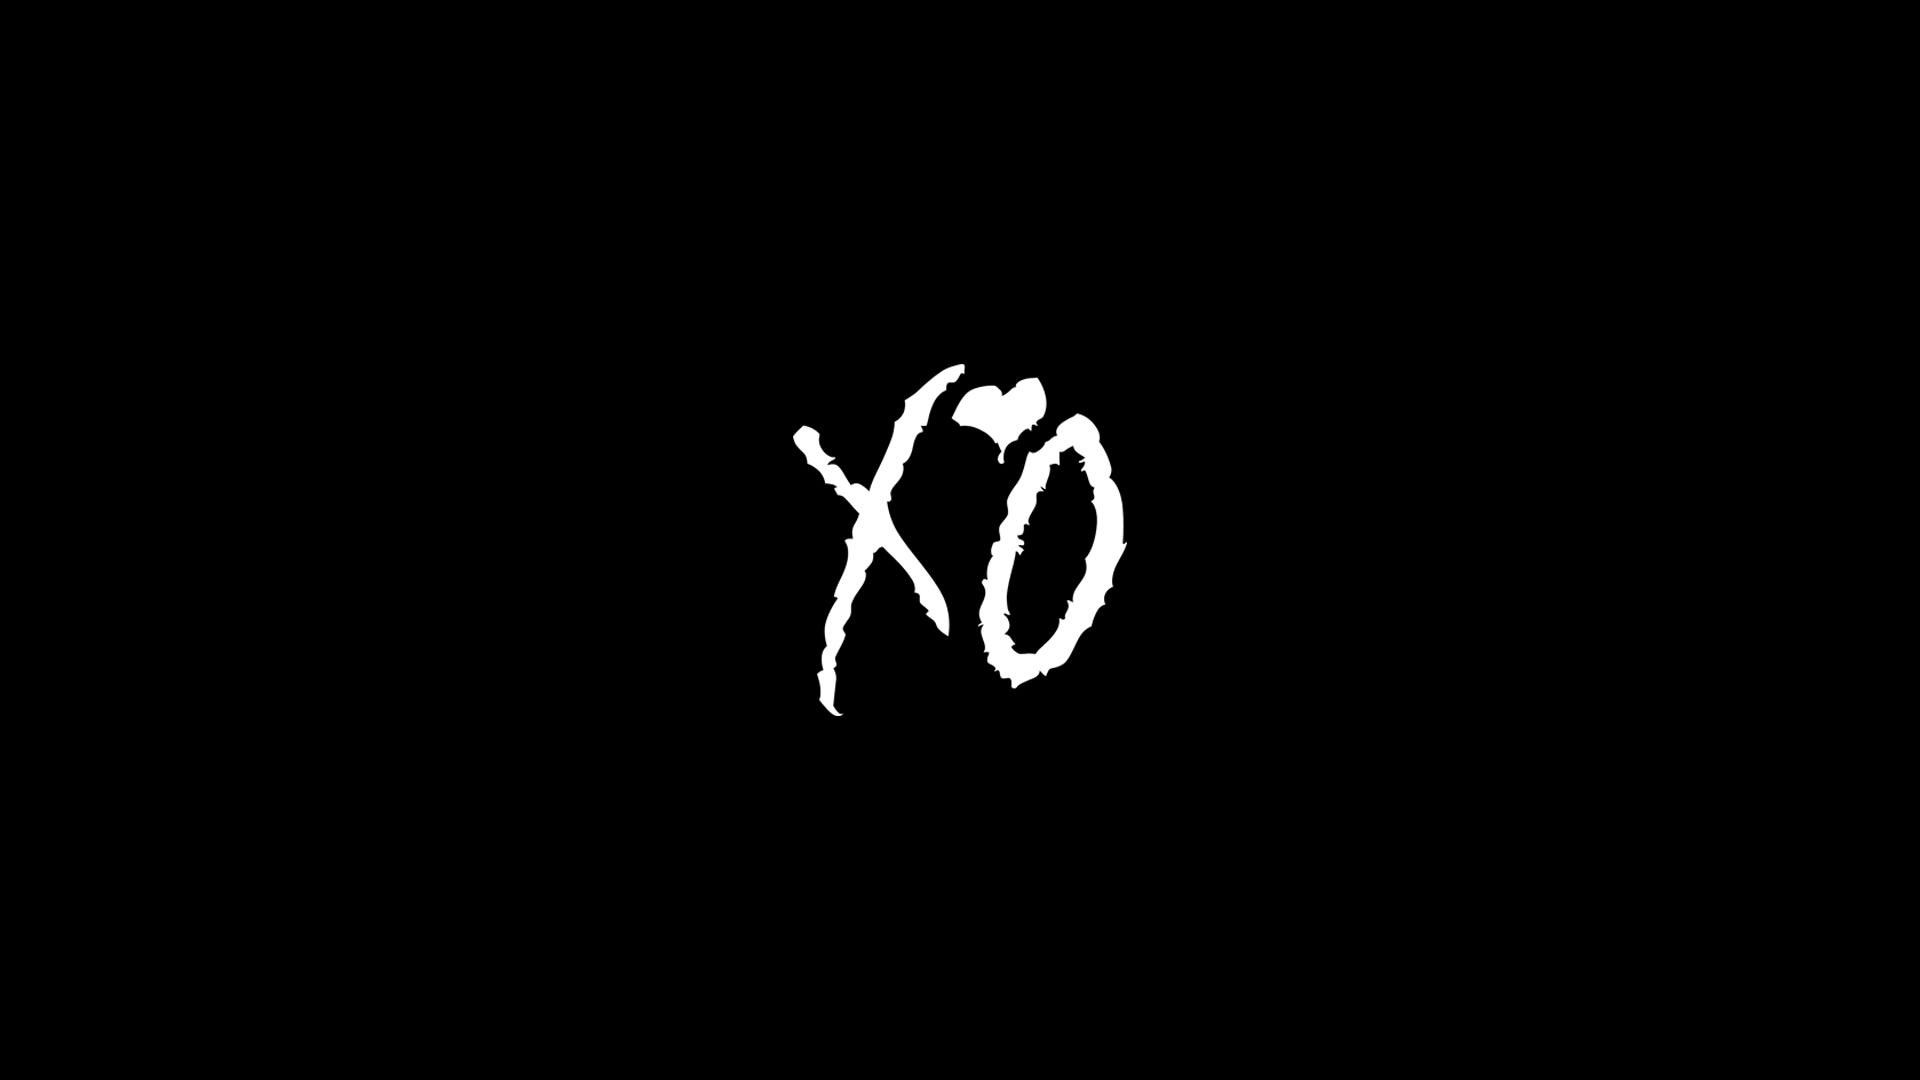 The Weeknd Xo Wallpaper